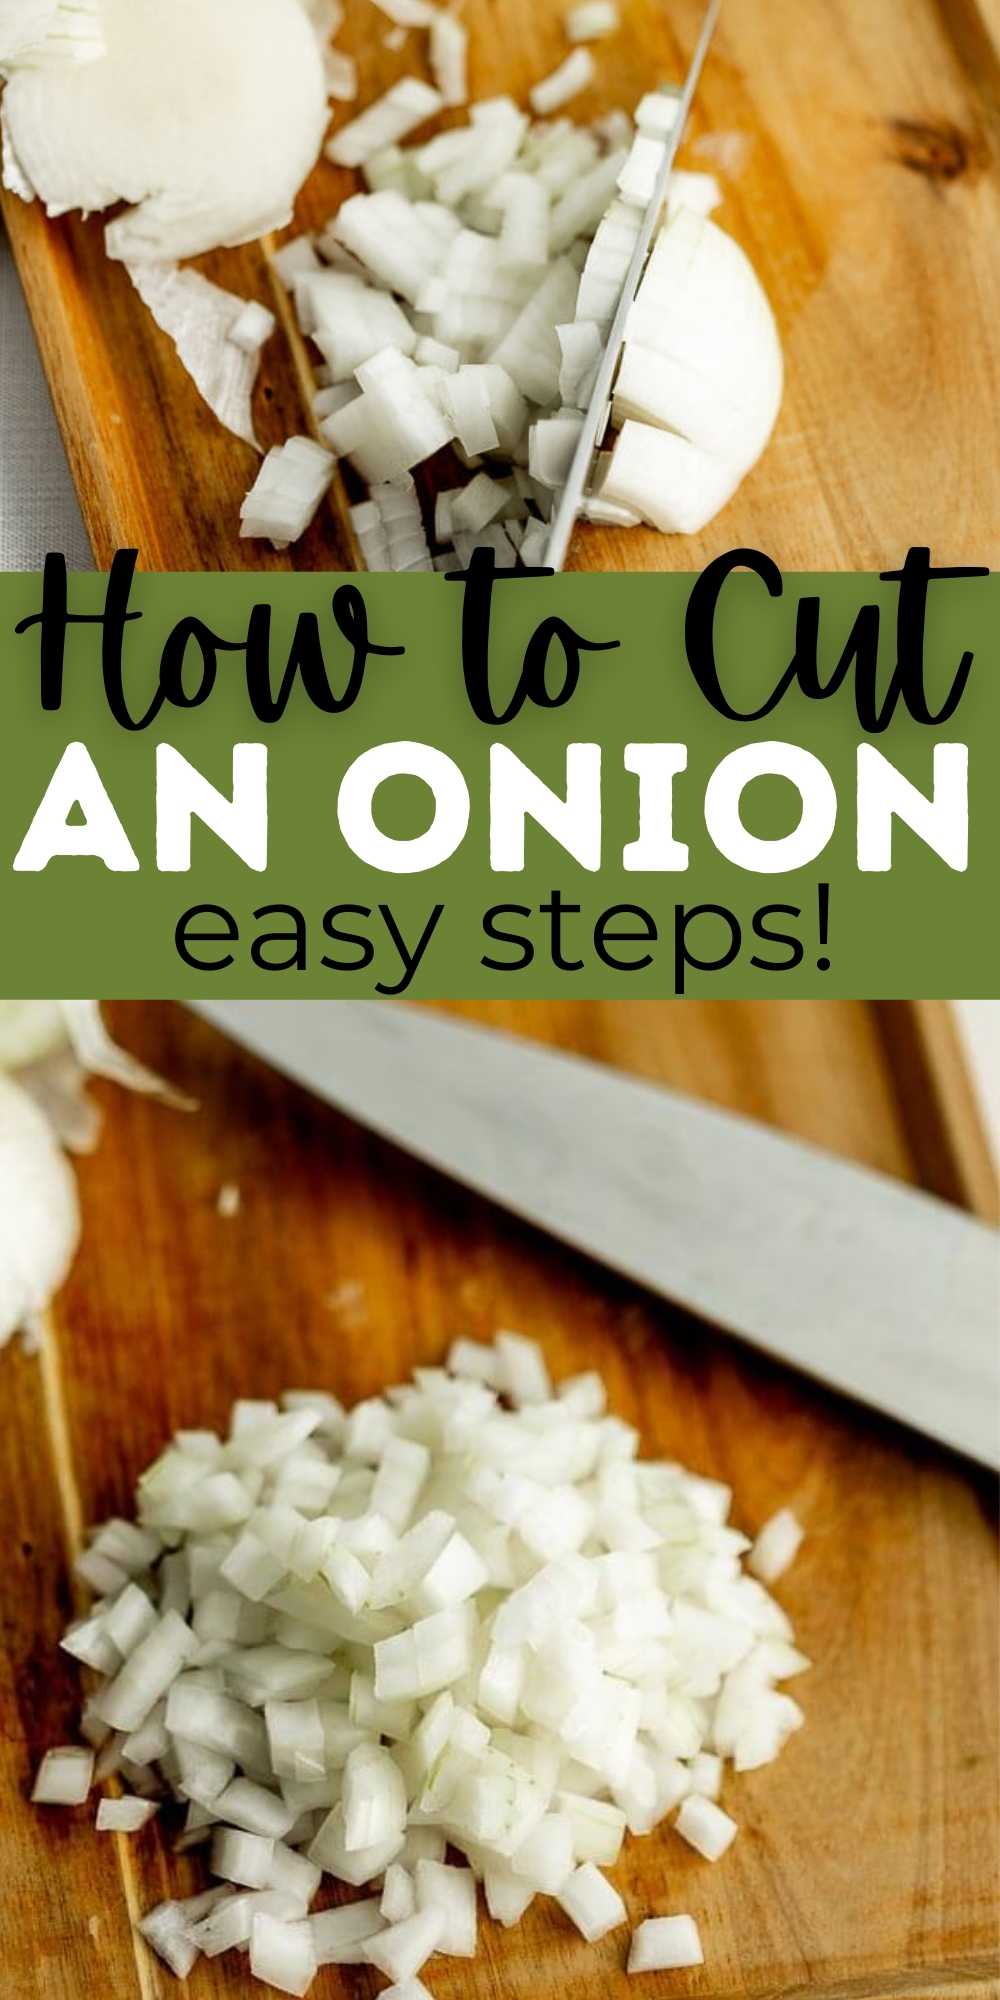 https://www.eatingonadime.com/wp-content/uploads/2022/01/How-to-Cut-an-Onion-Pin-3.jpg